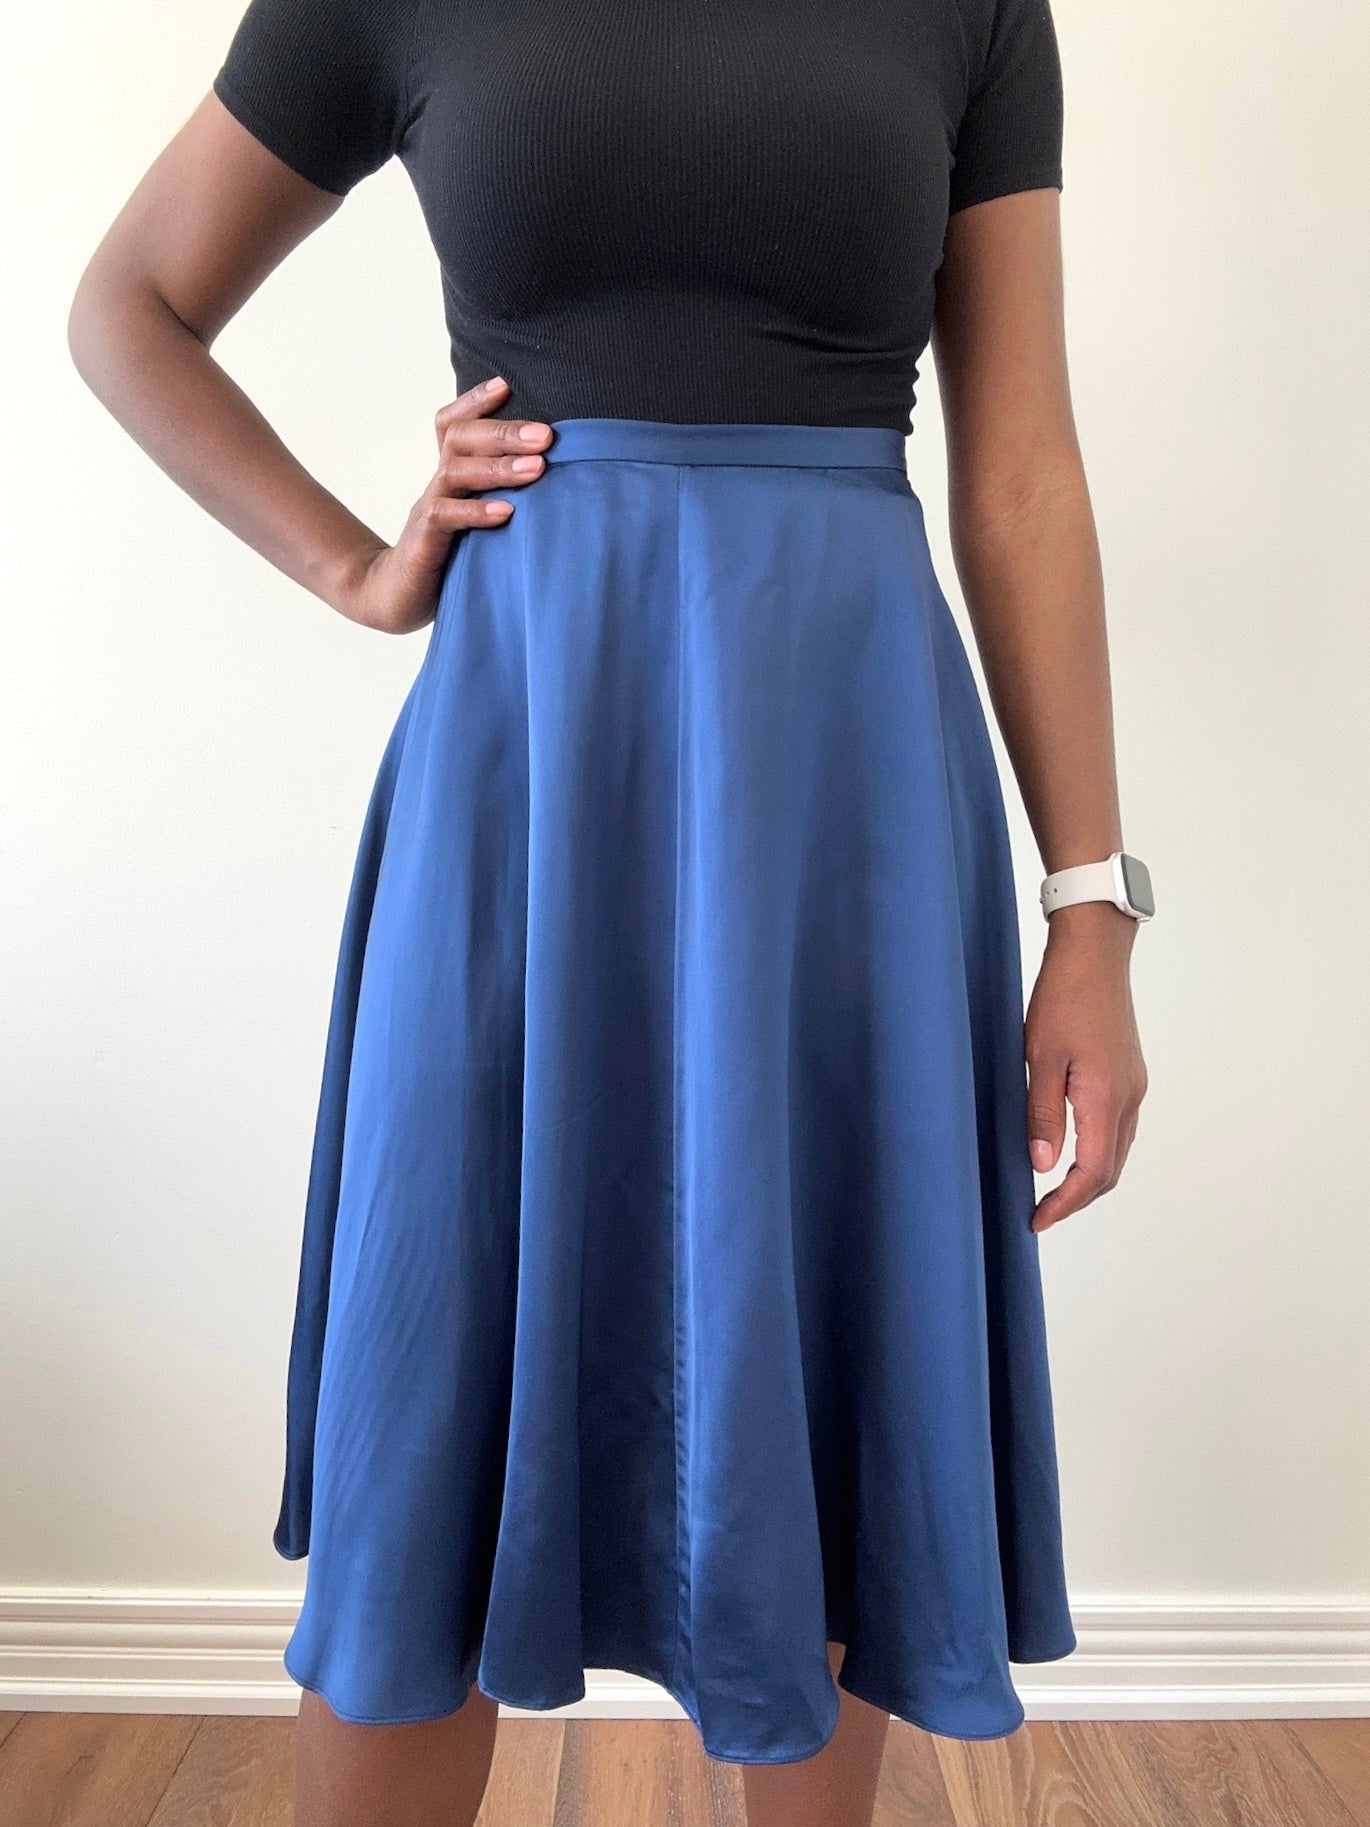 Jill Stuart Blue Satin Skirt Size 6